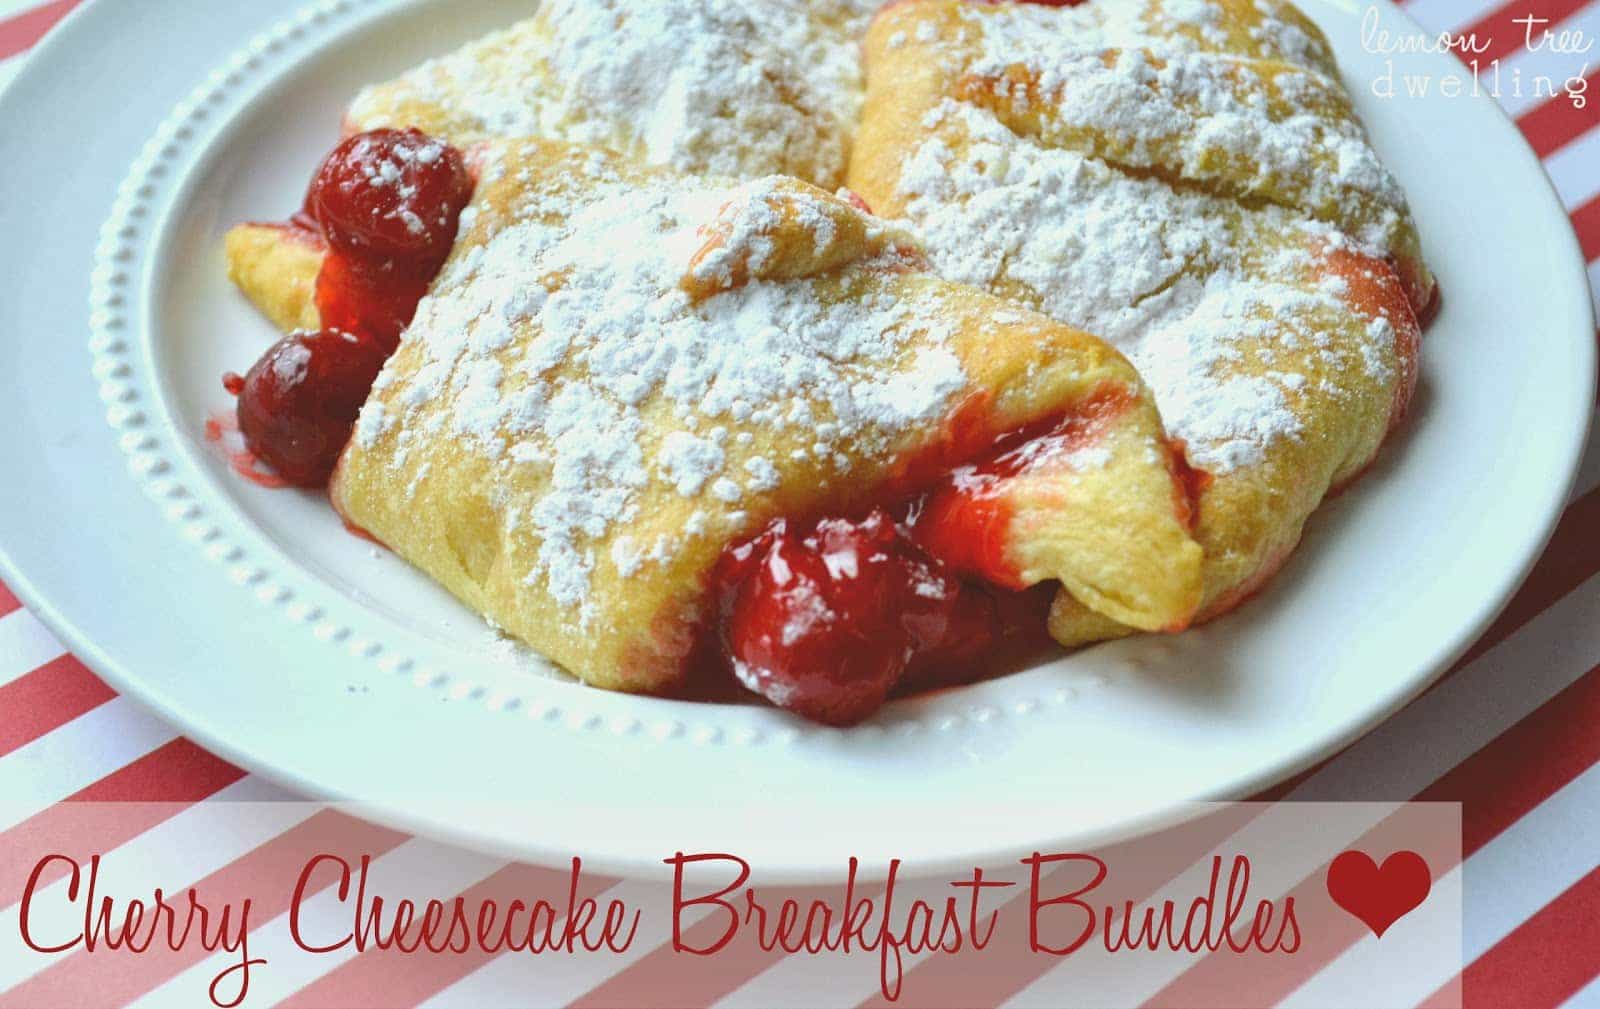 https://lemontreedwelling.com/2013/02/cherry-cheesecake-breakfast-bundles.html